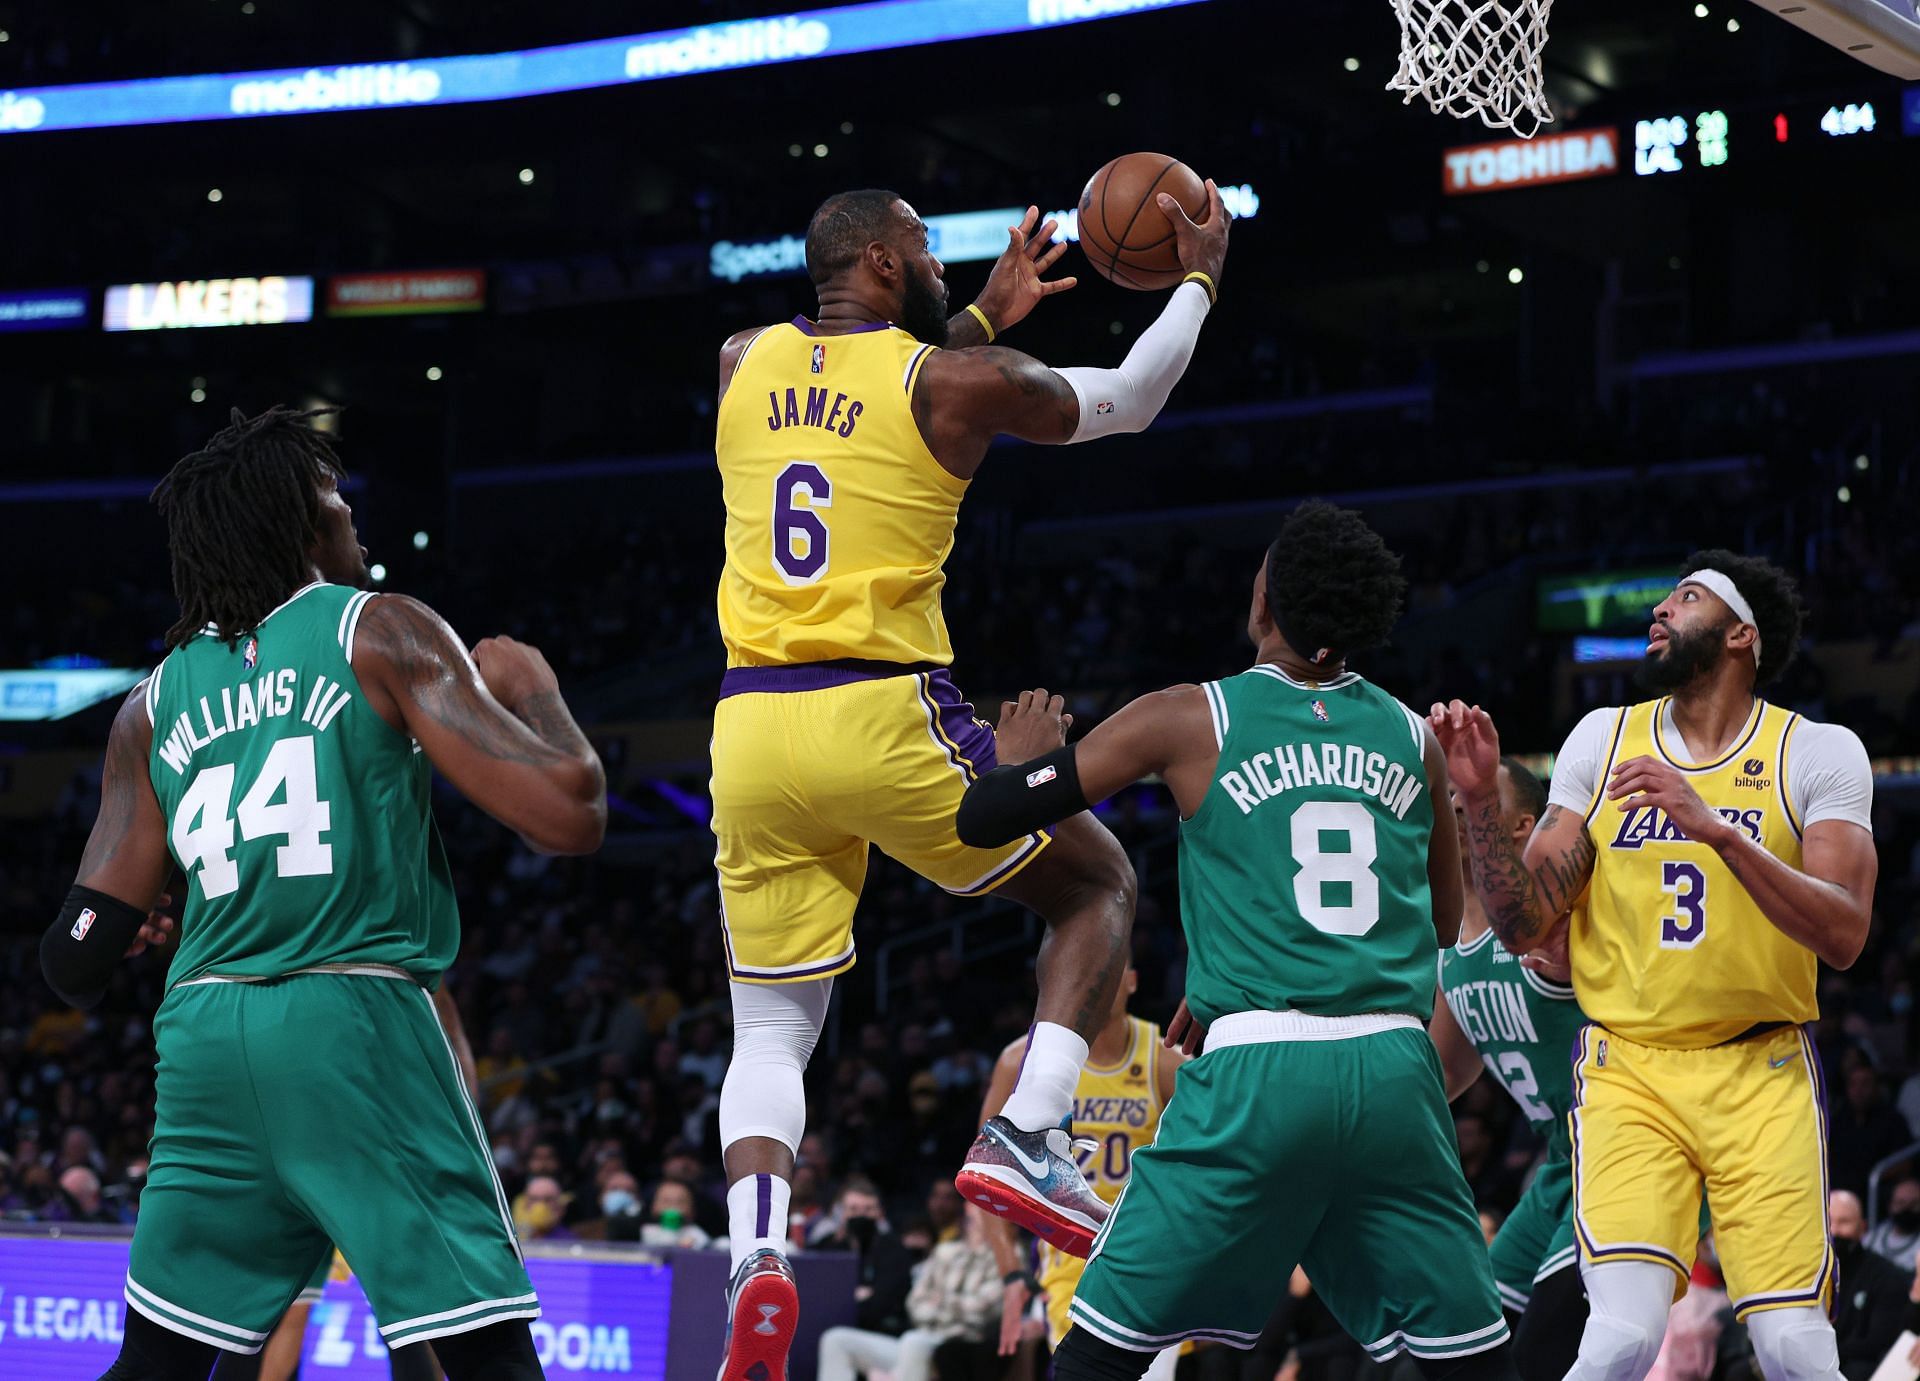 Boston Celtics vs LA Lakers